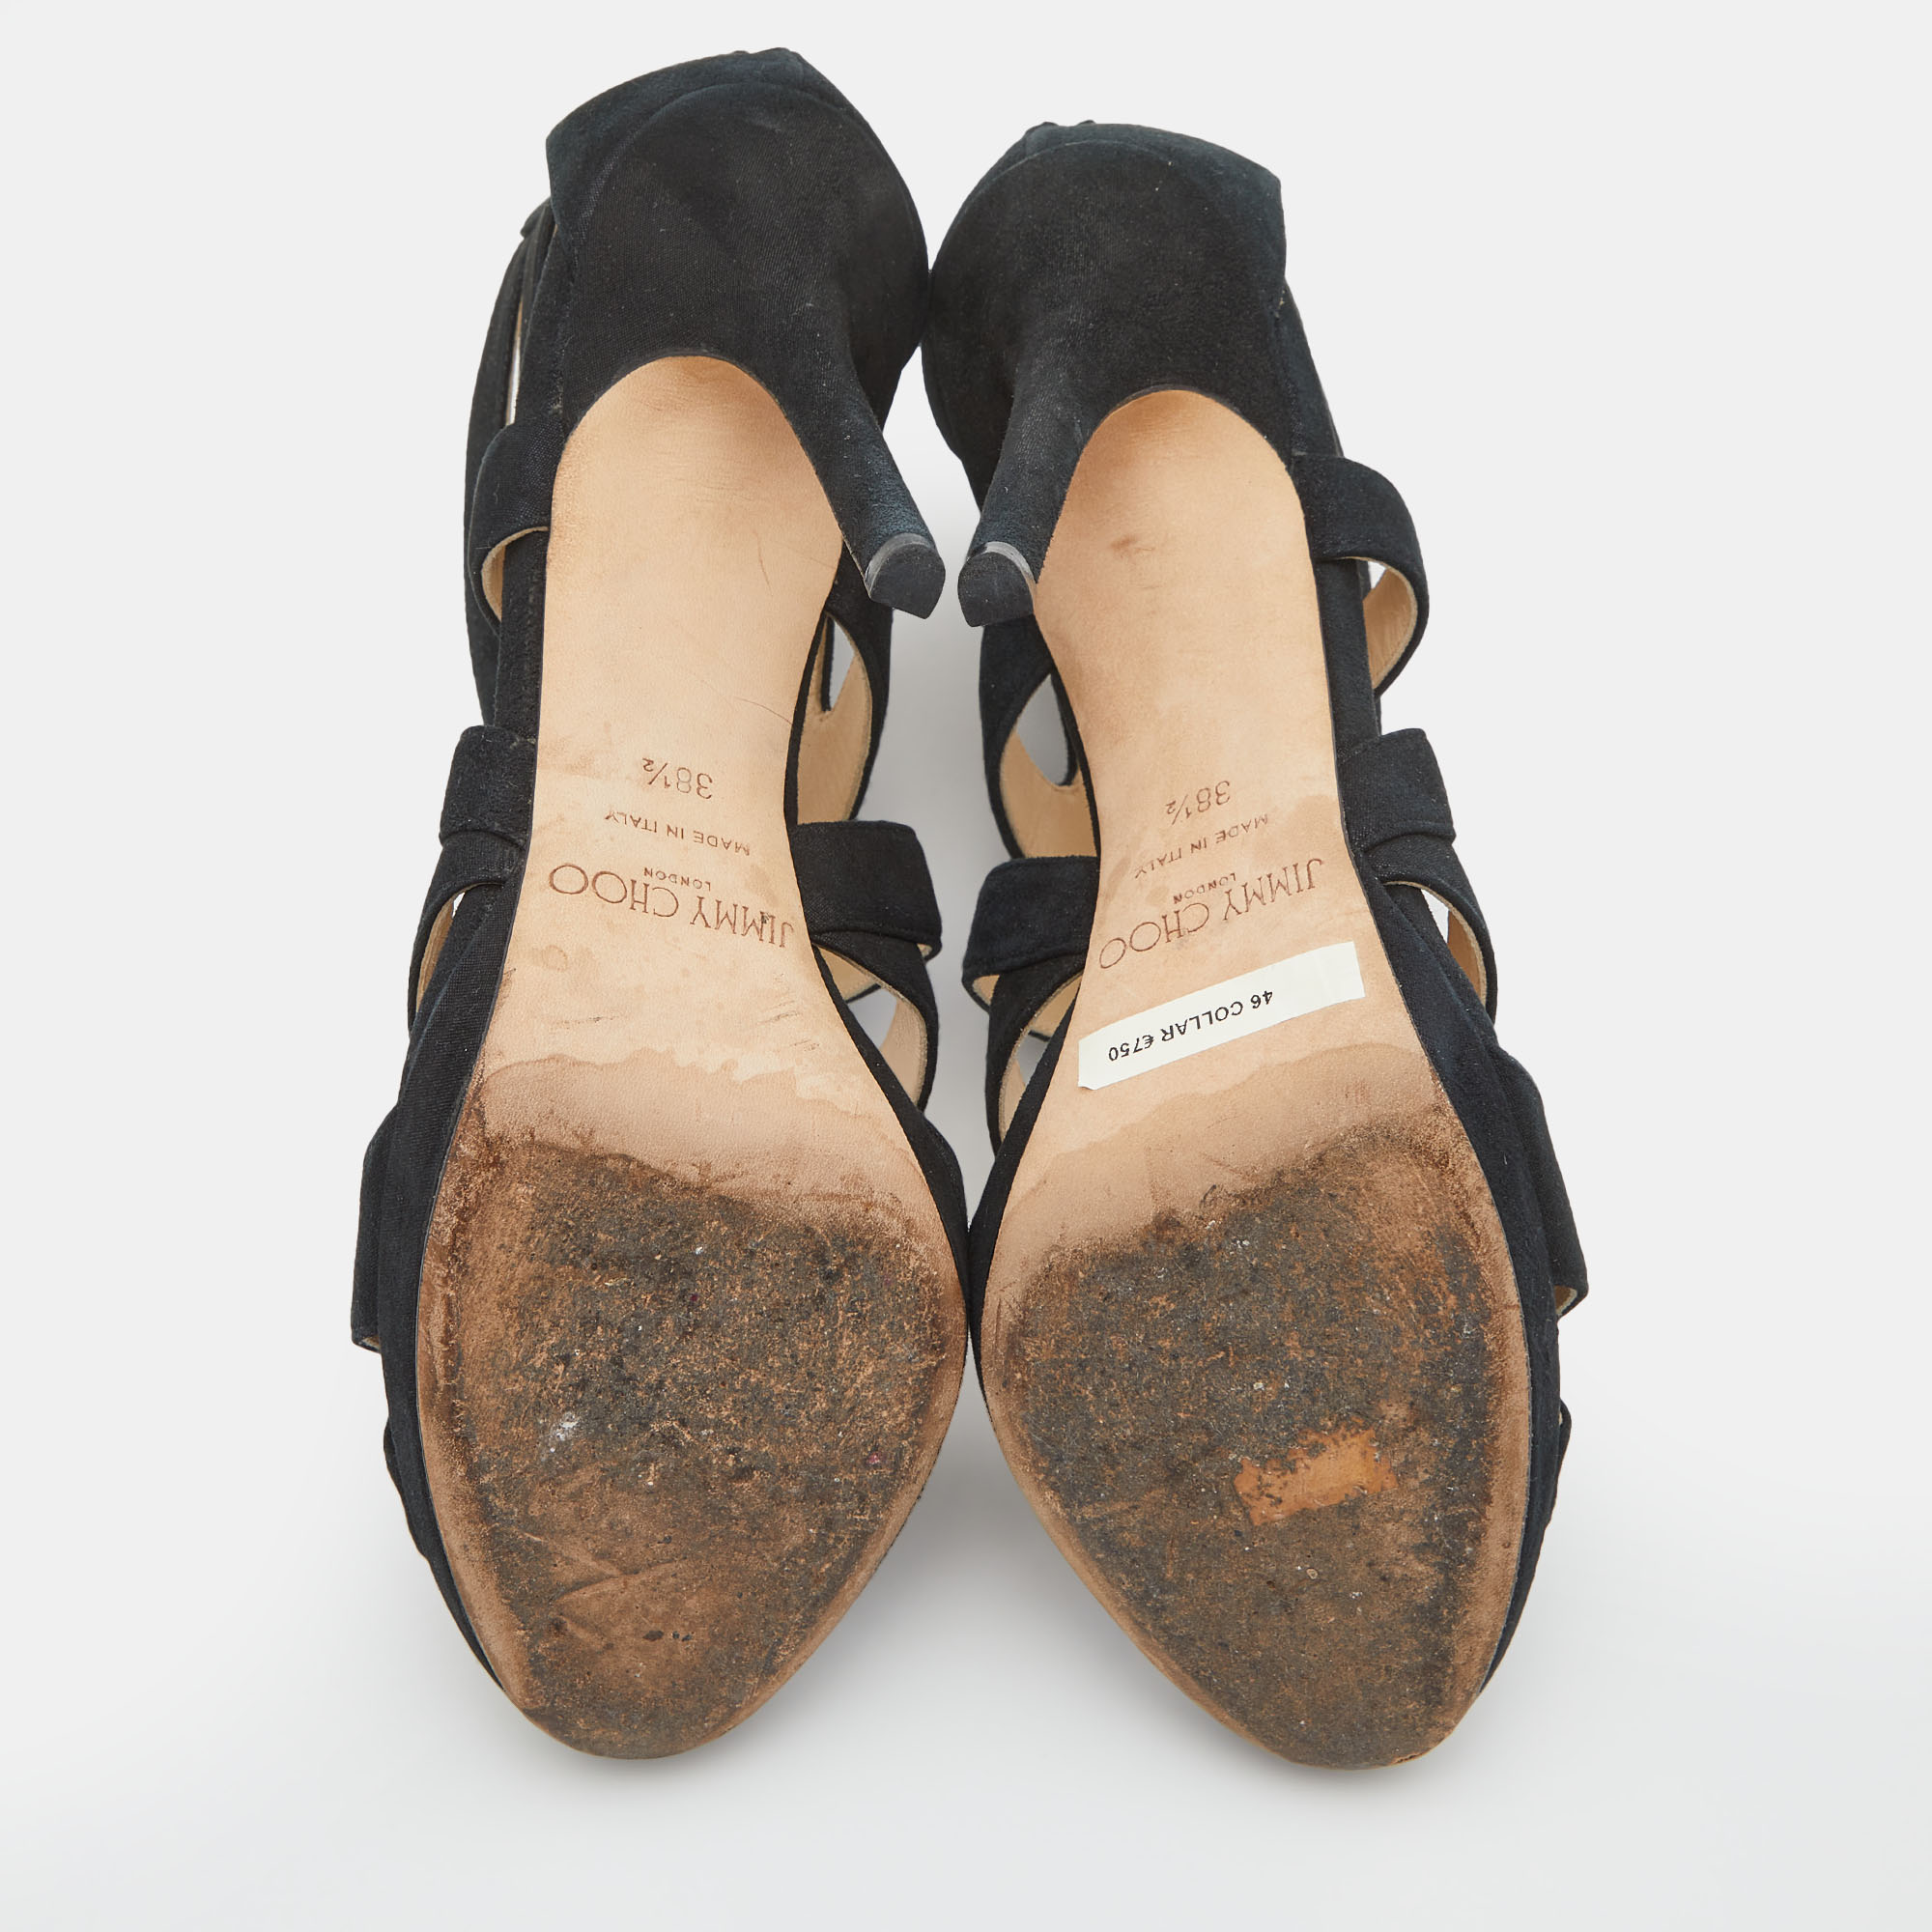 Jimmy Choo Black Glitter Suede Cutout Collar Open Toe Sandals Size 38.5